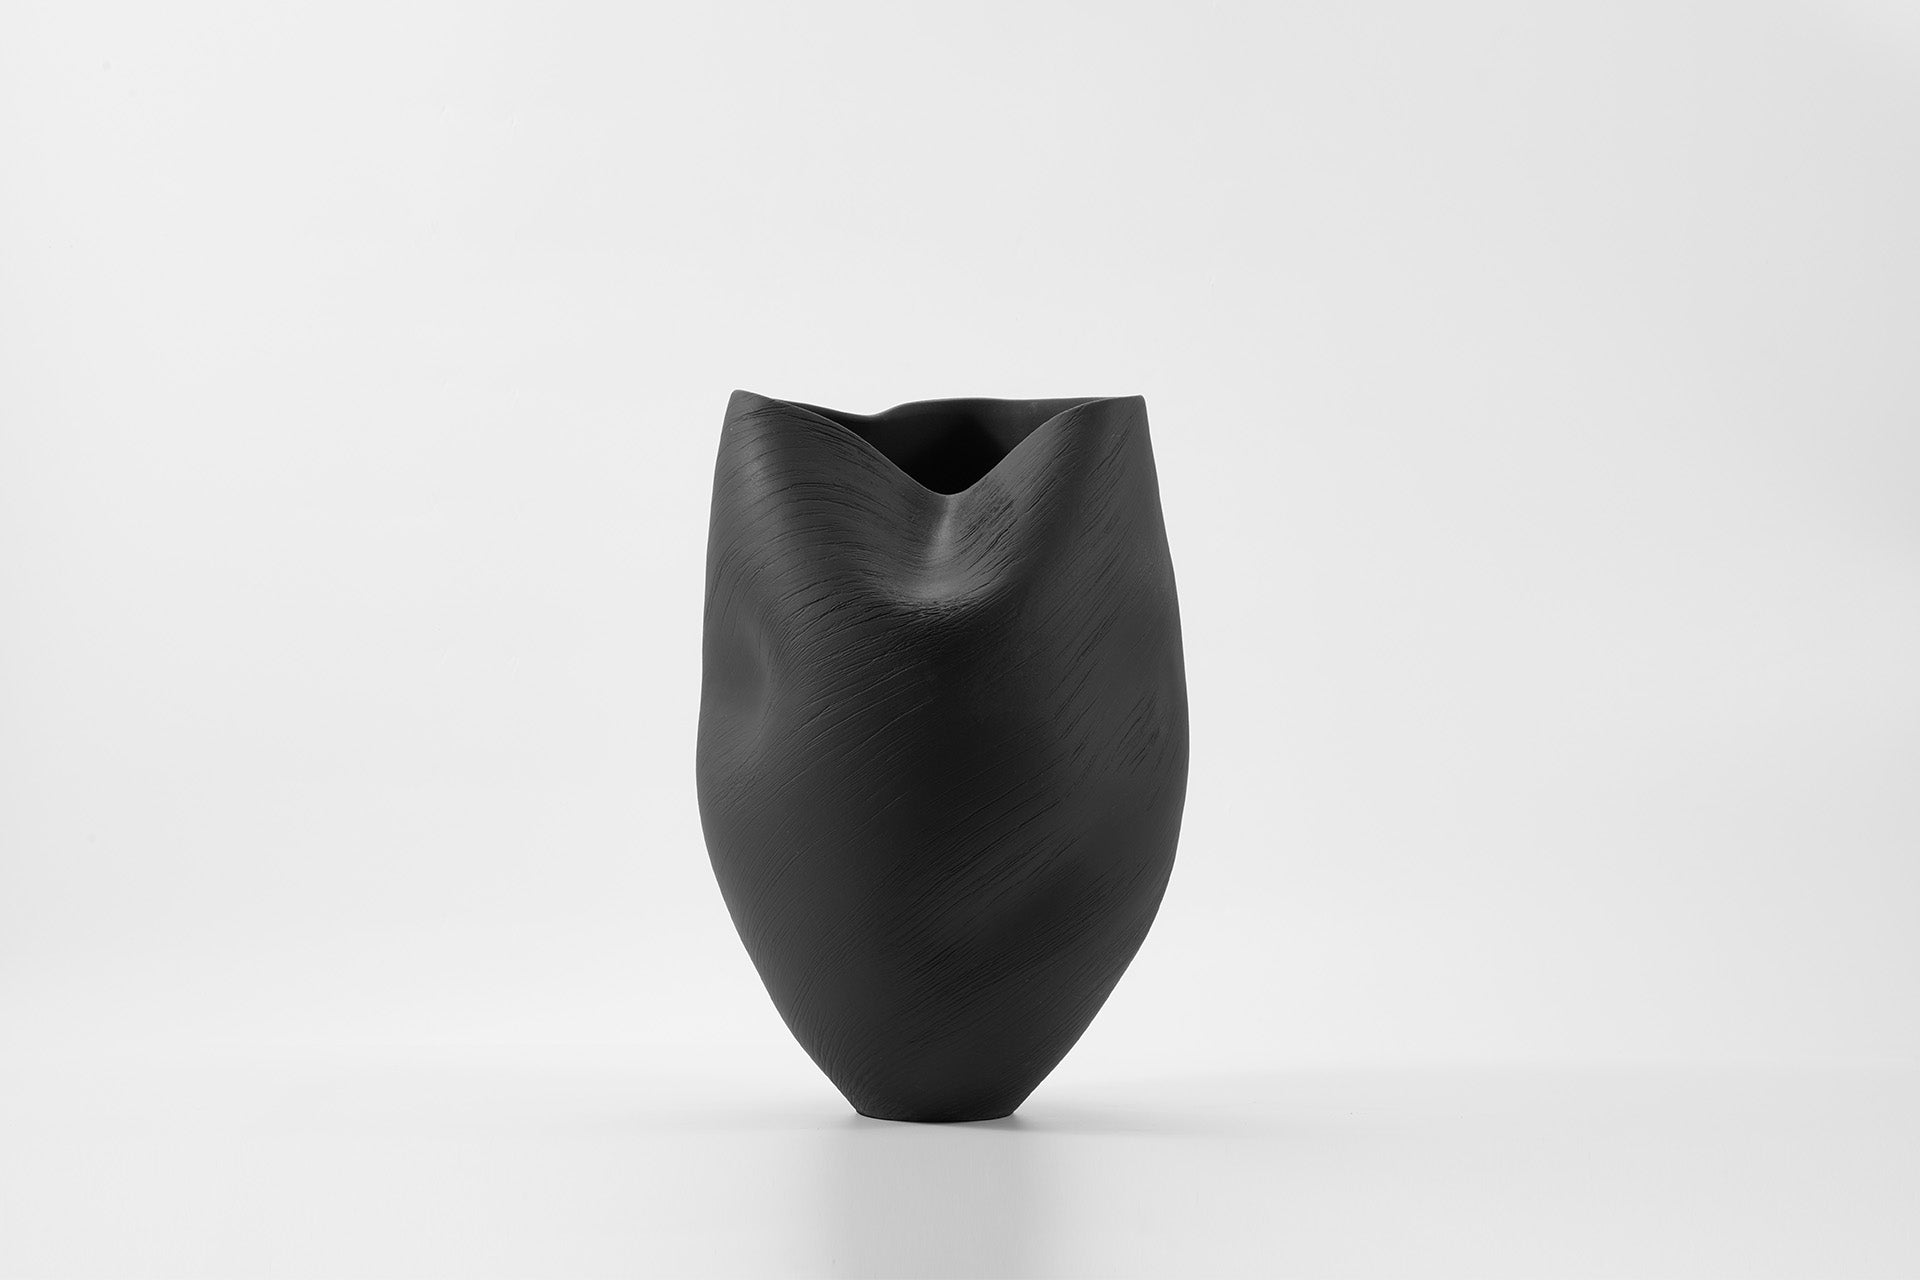 Morph Vase